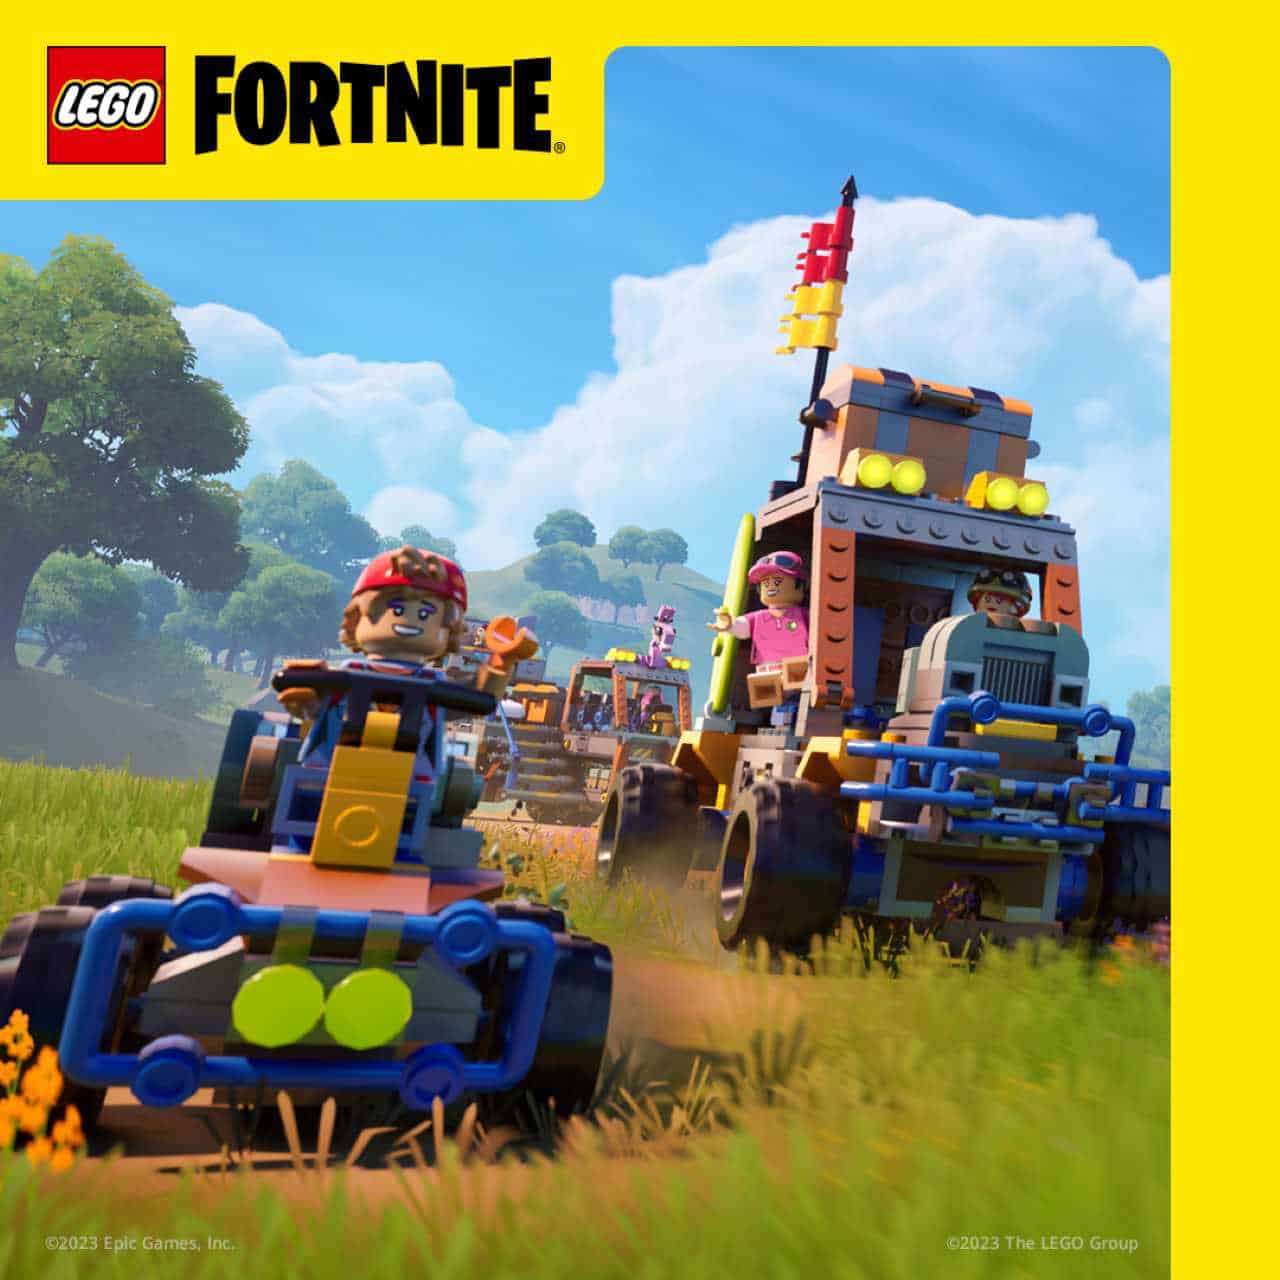 LEGO Fortnite vehcles: Teaser of vehicles in LEGO Fortnite.